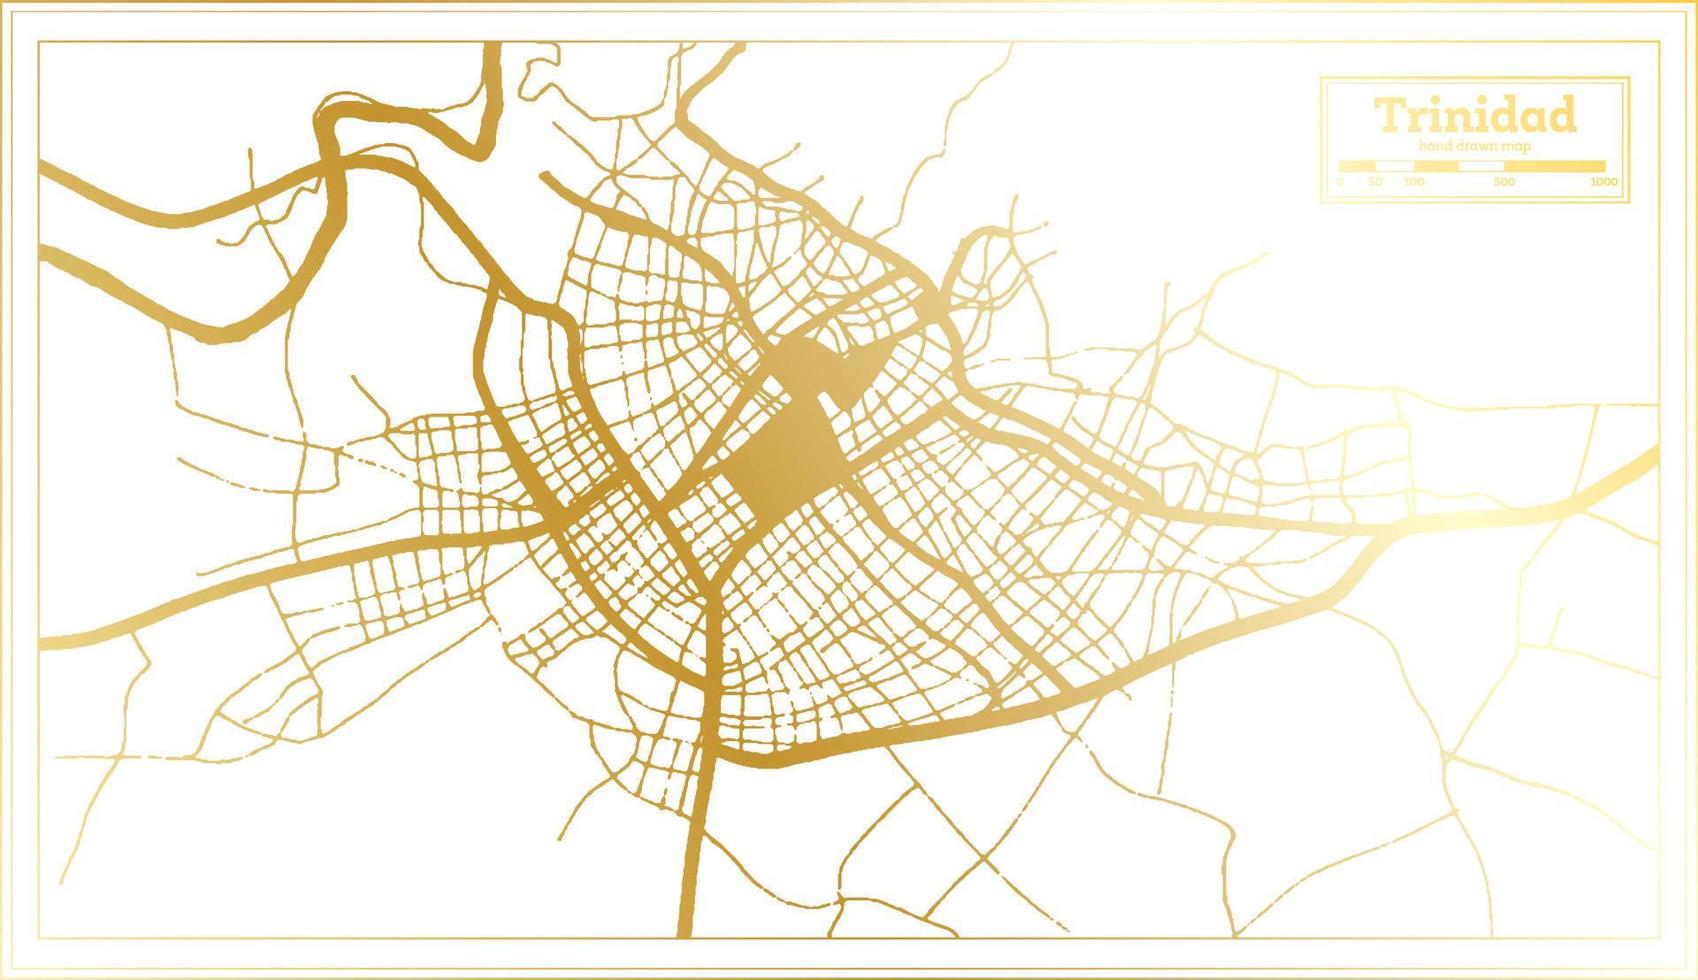 Trinidad Cuba City Map in Retro Style in Golden Color. Outline Map. vector